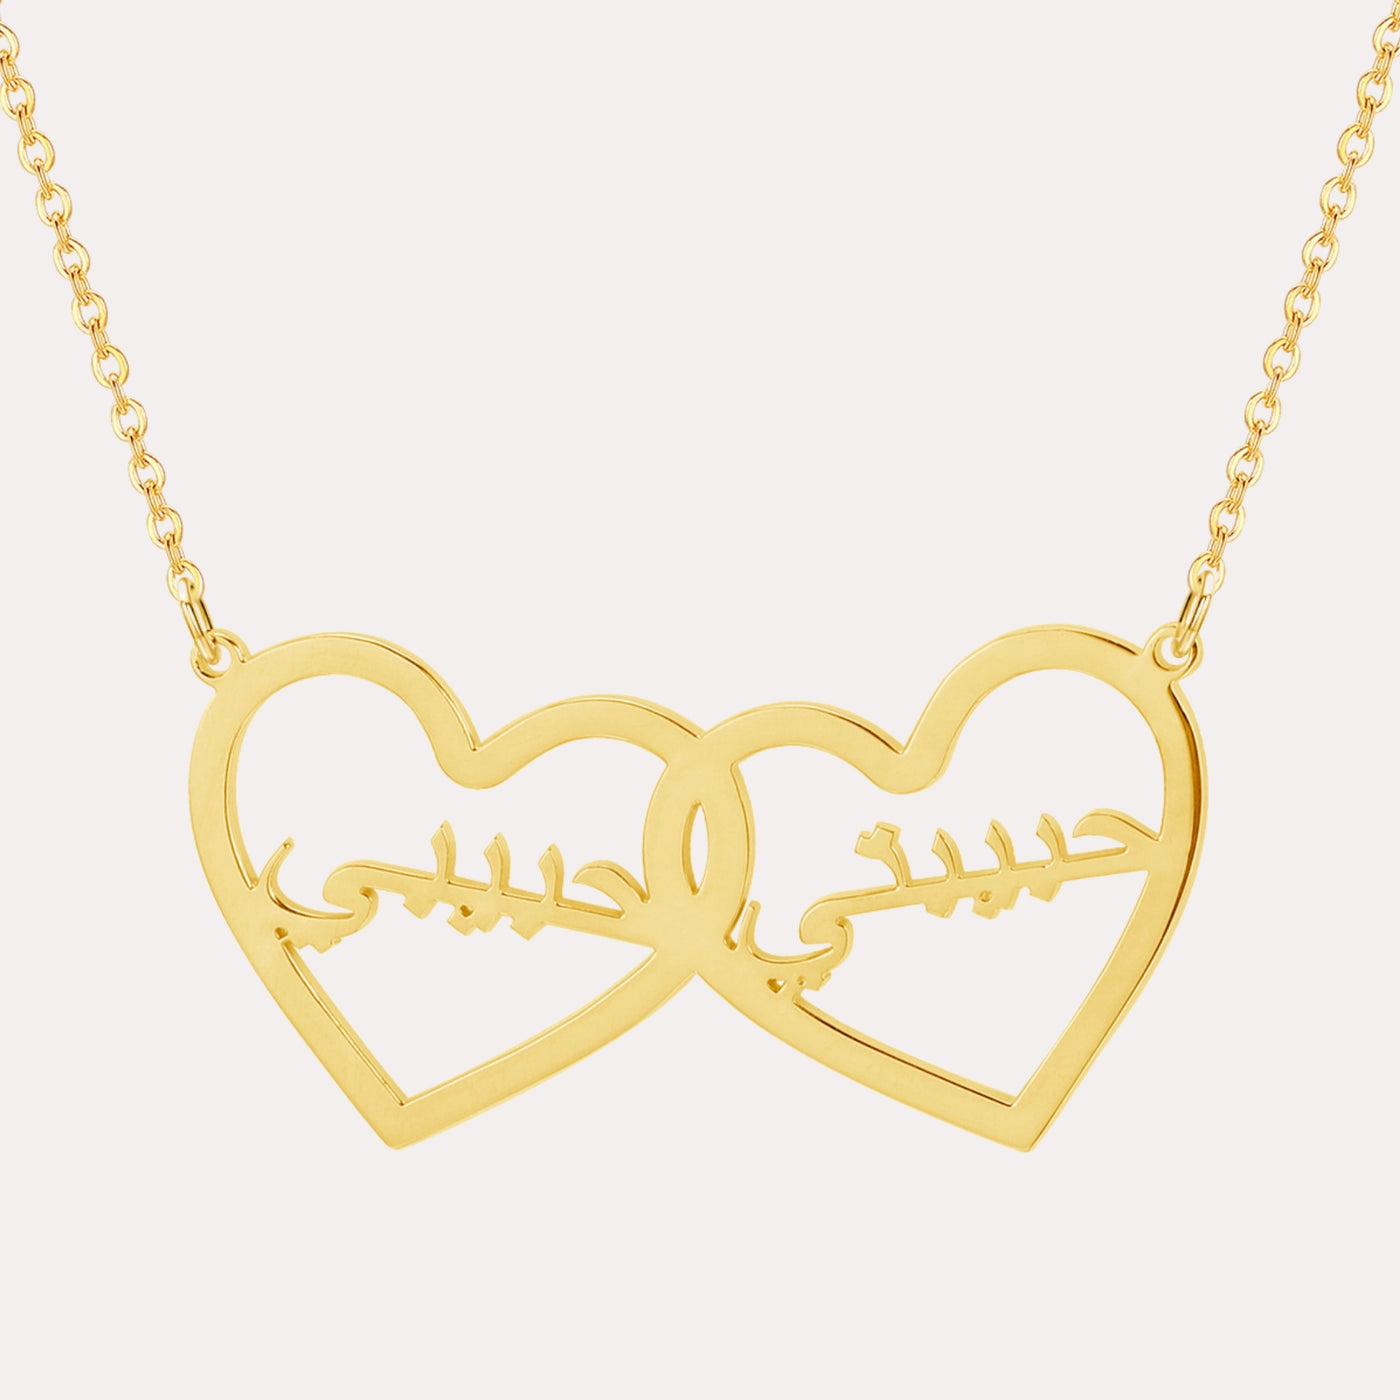 ZUDO-Double-Heart-Name-Necklace-Arabic-Gold